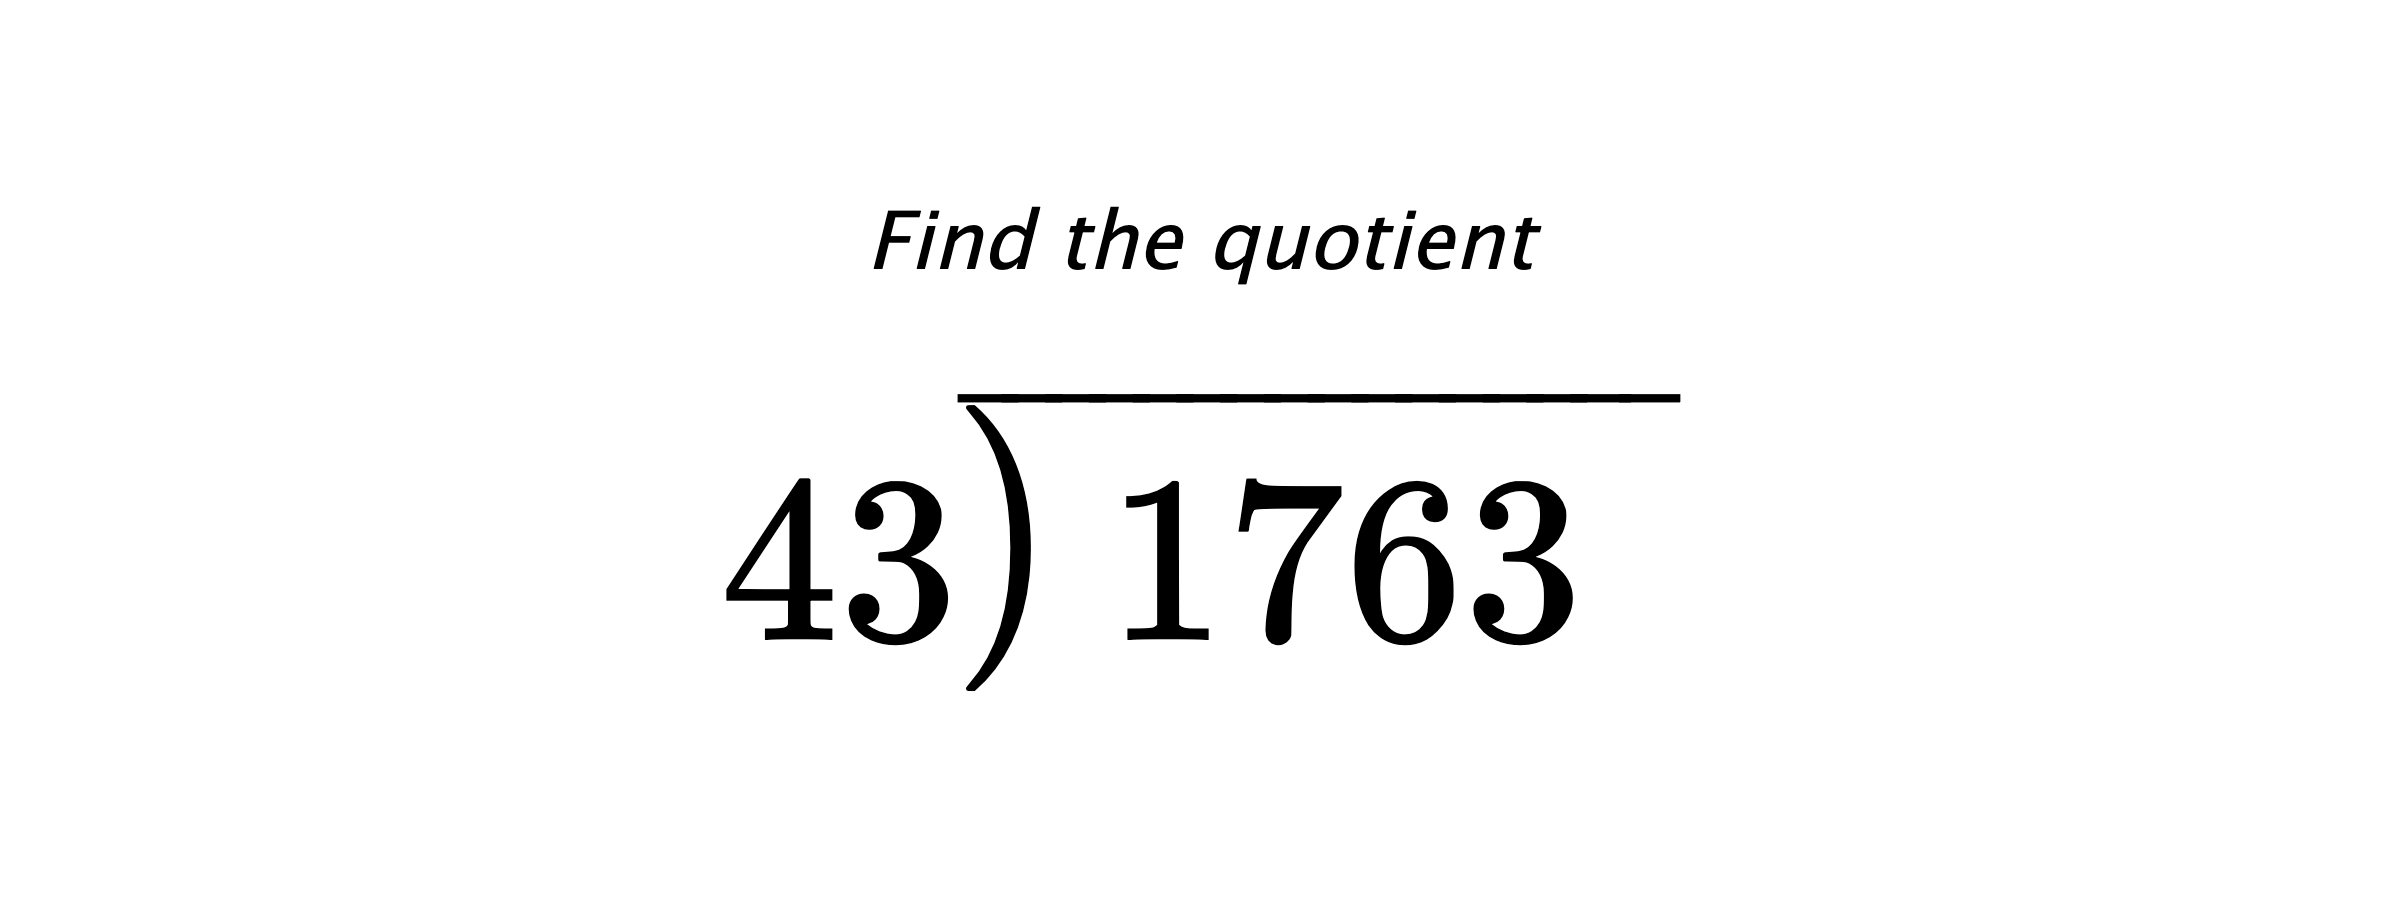 Find the quotient $ 43{\overline{\smash{\raise.3ex\hbox{$\big)$}}\,1763\phantom{)}}} $